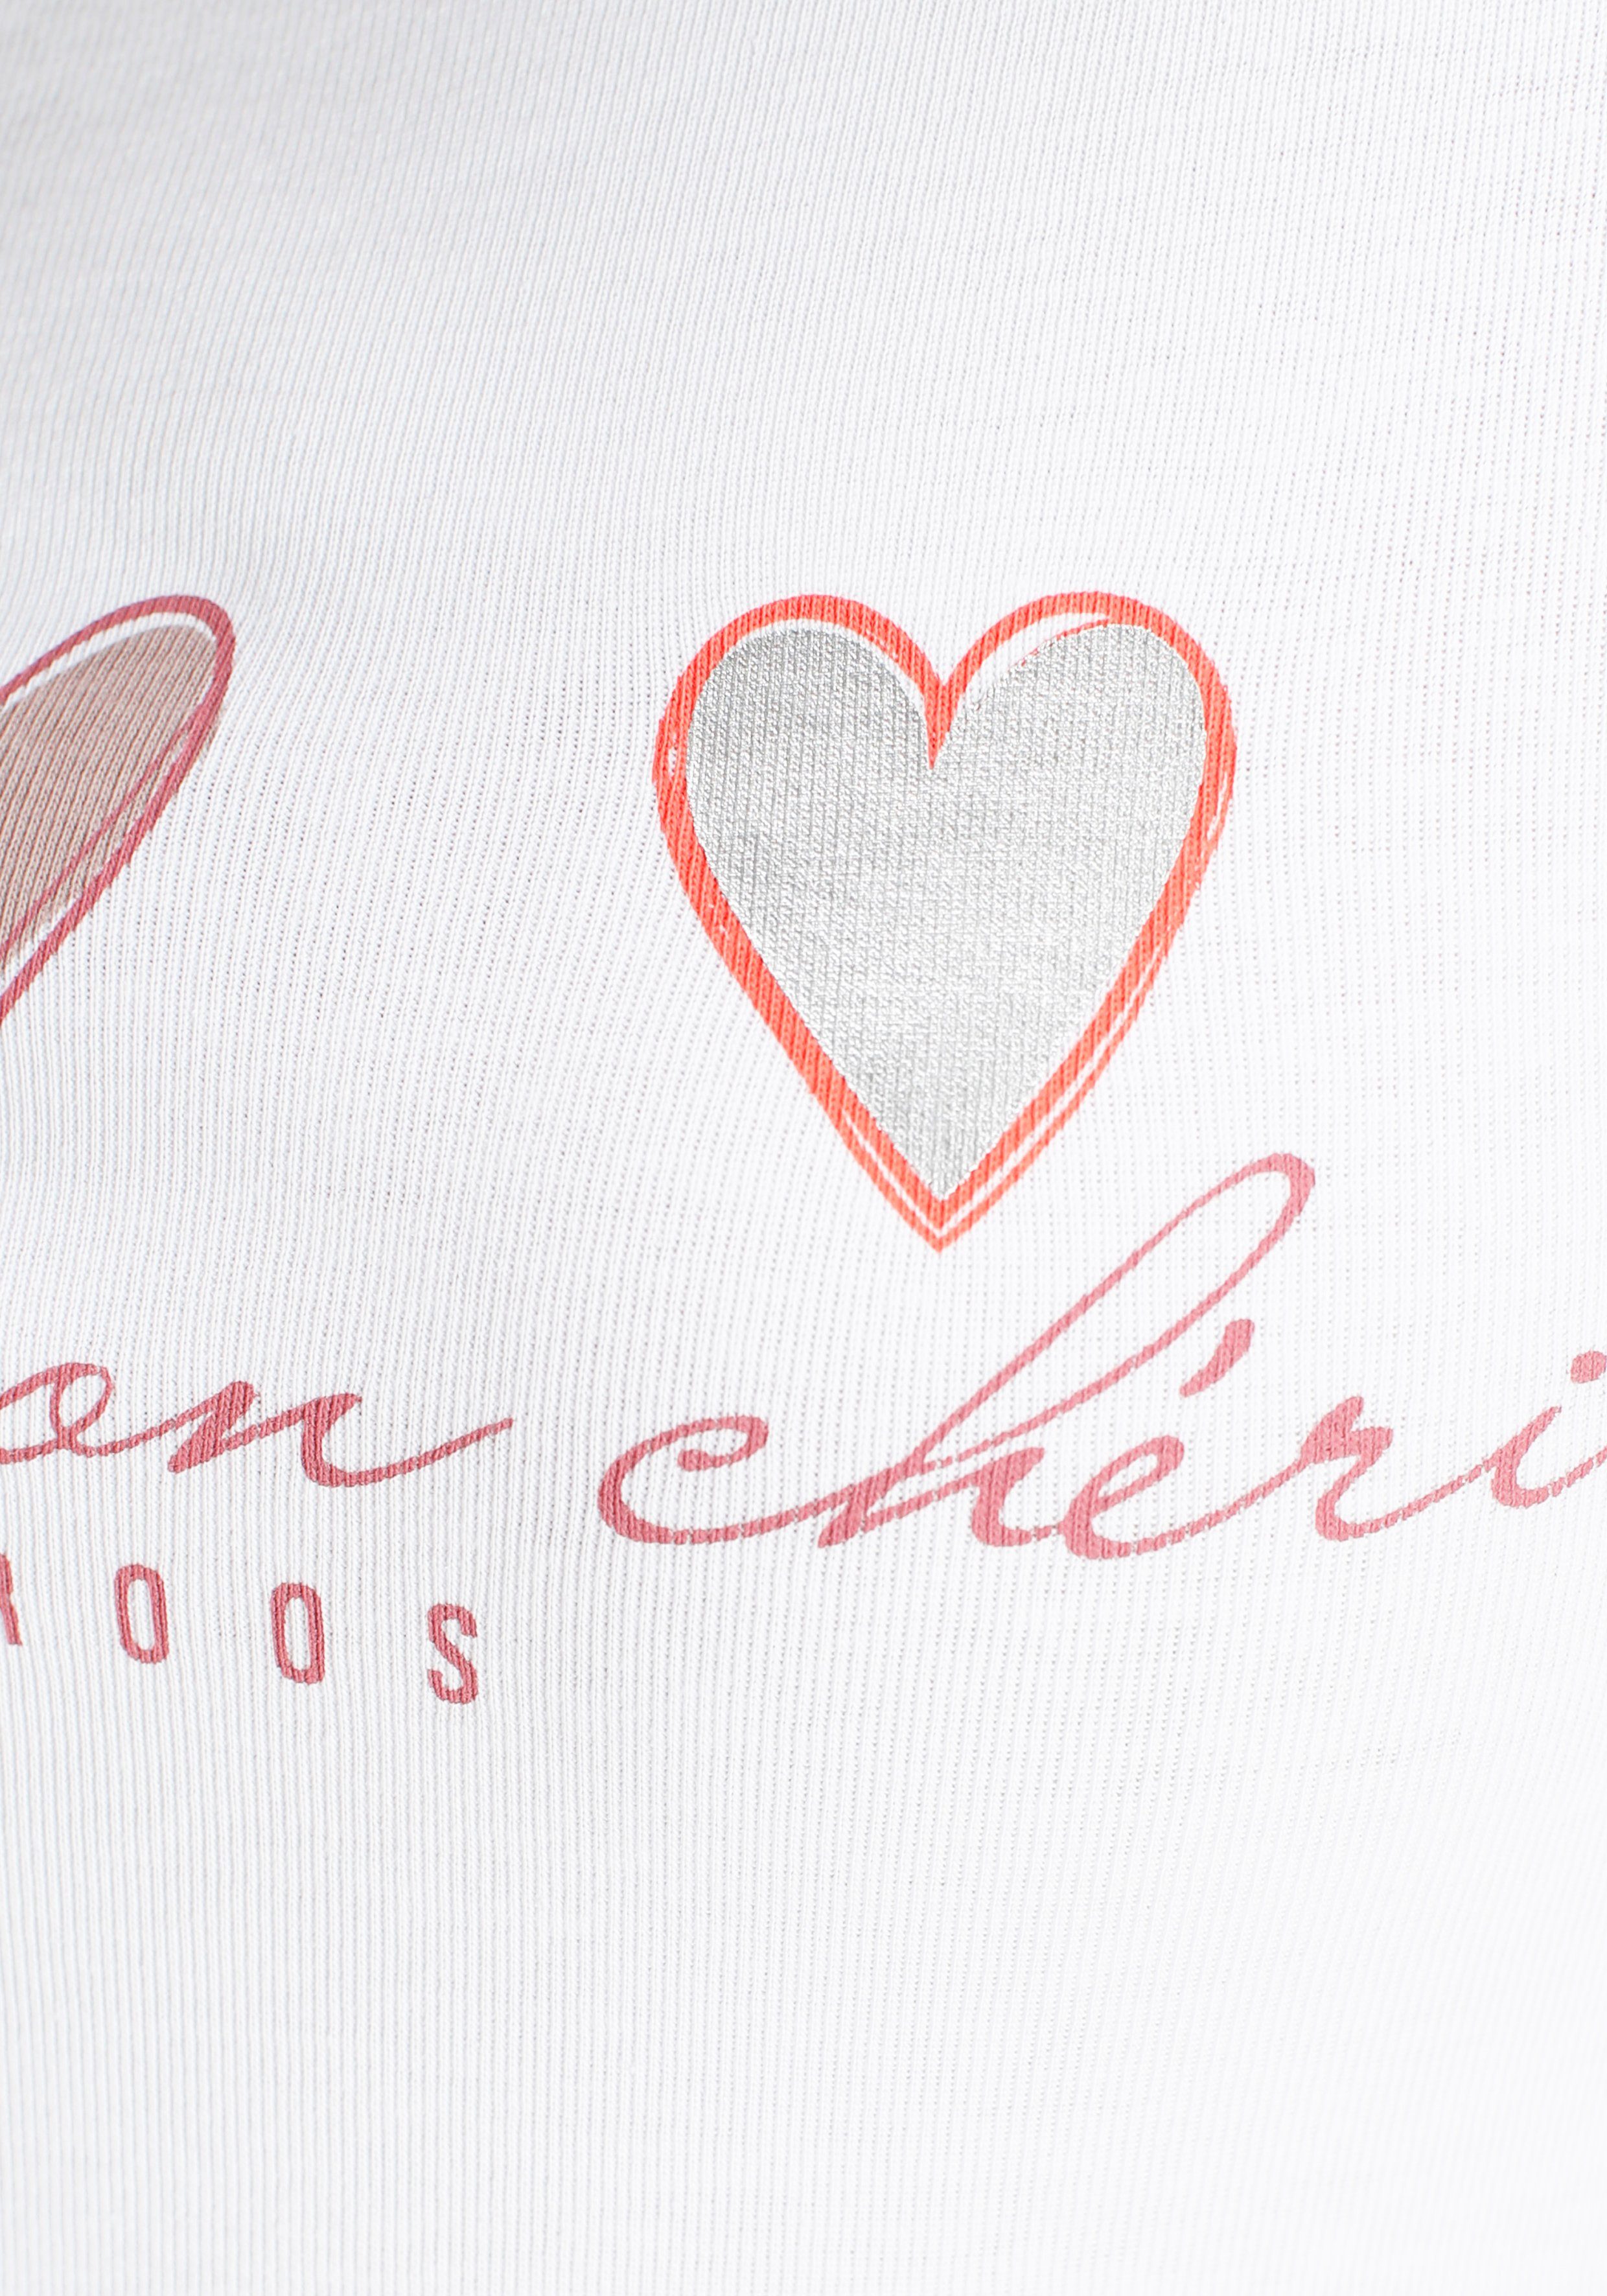 KangaROOS süßen weiß NEUE KOLLEKTION - Herz-Logodruck Longsleeve mit